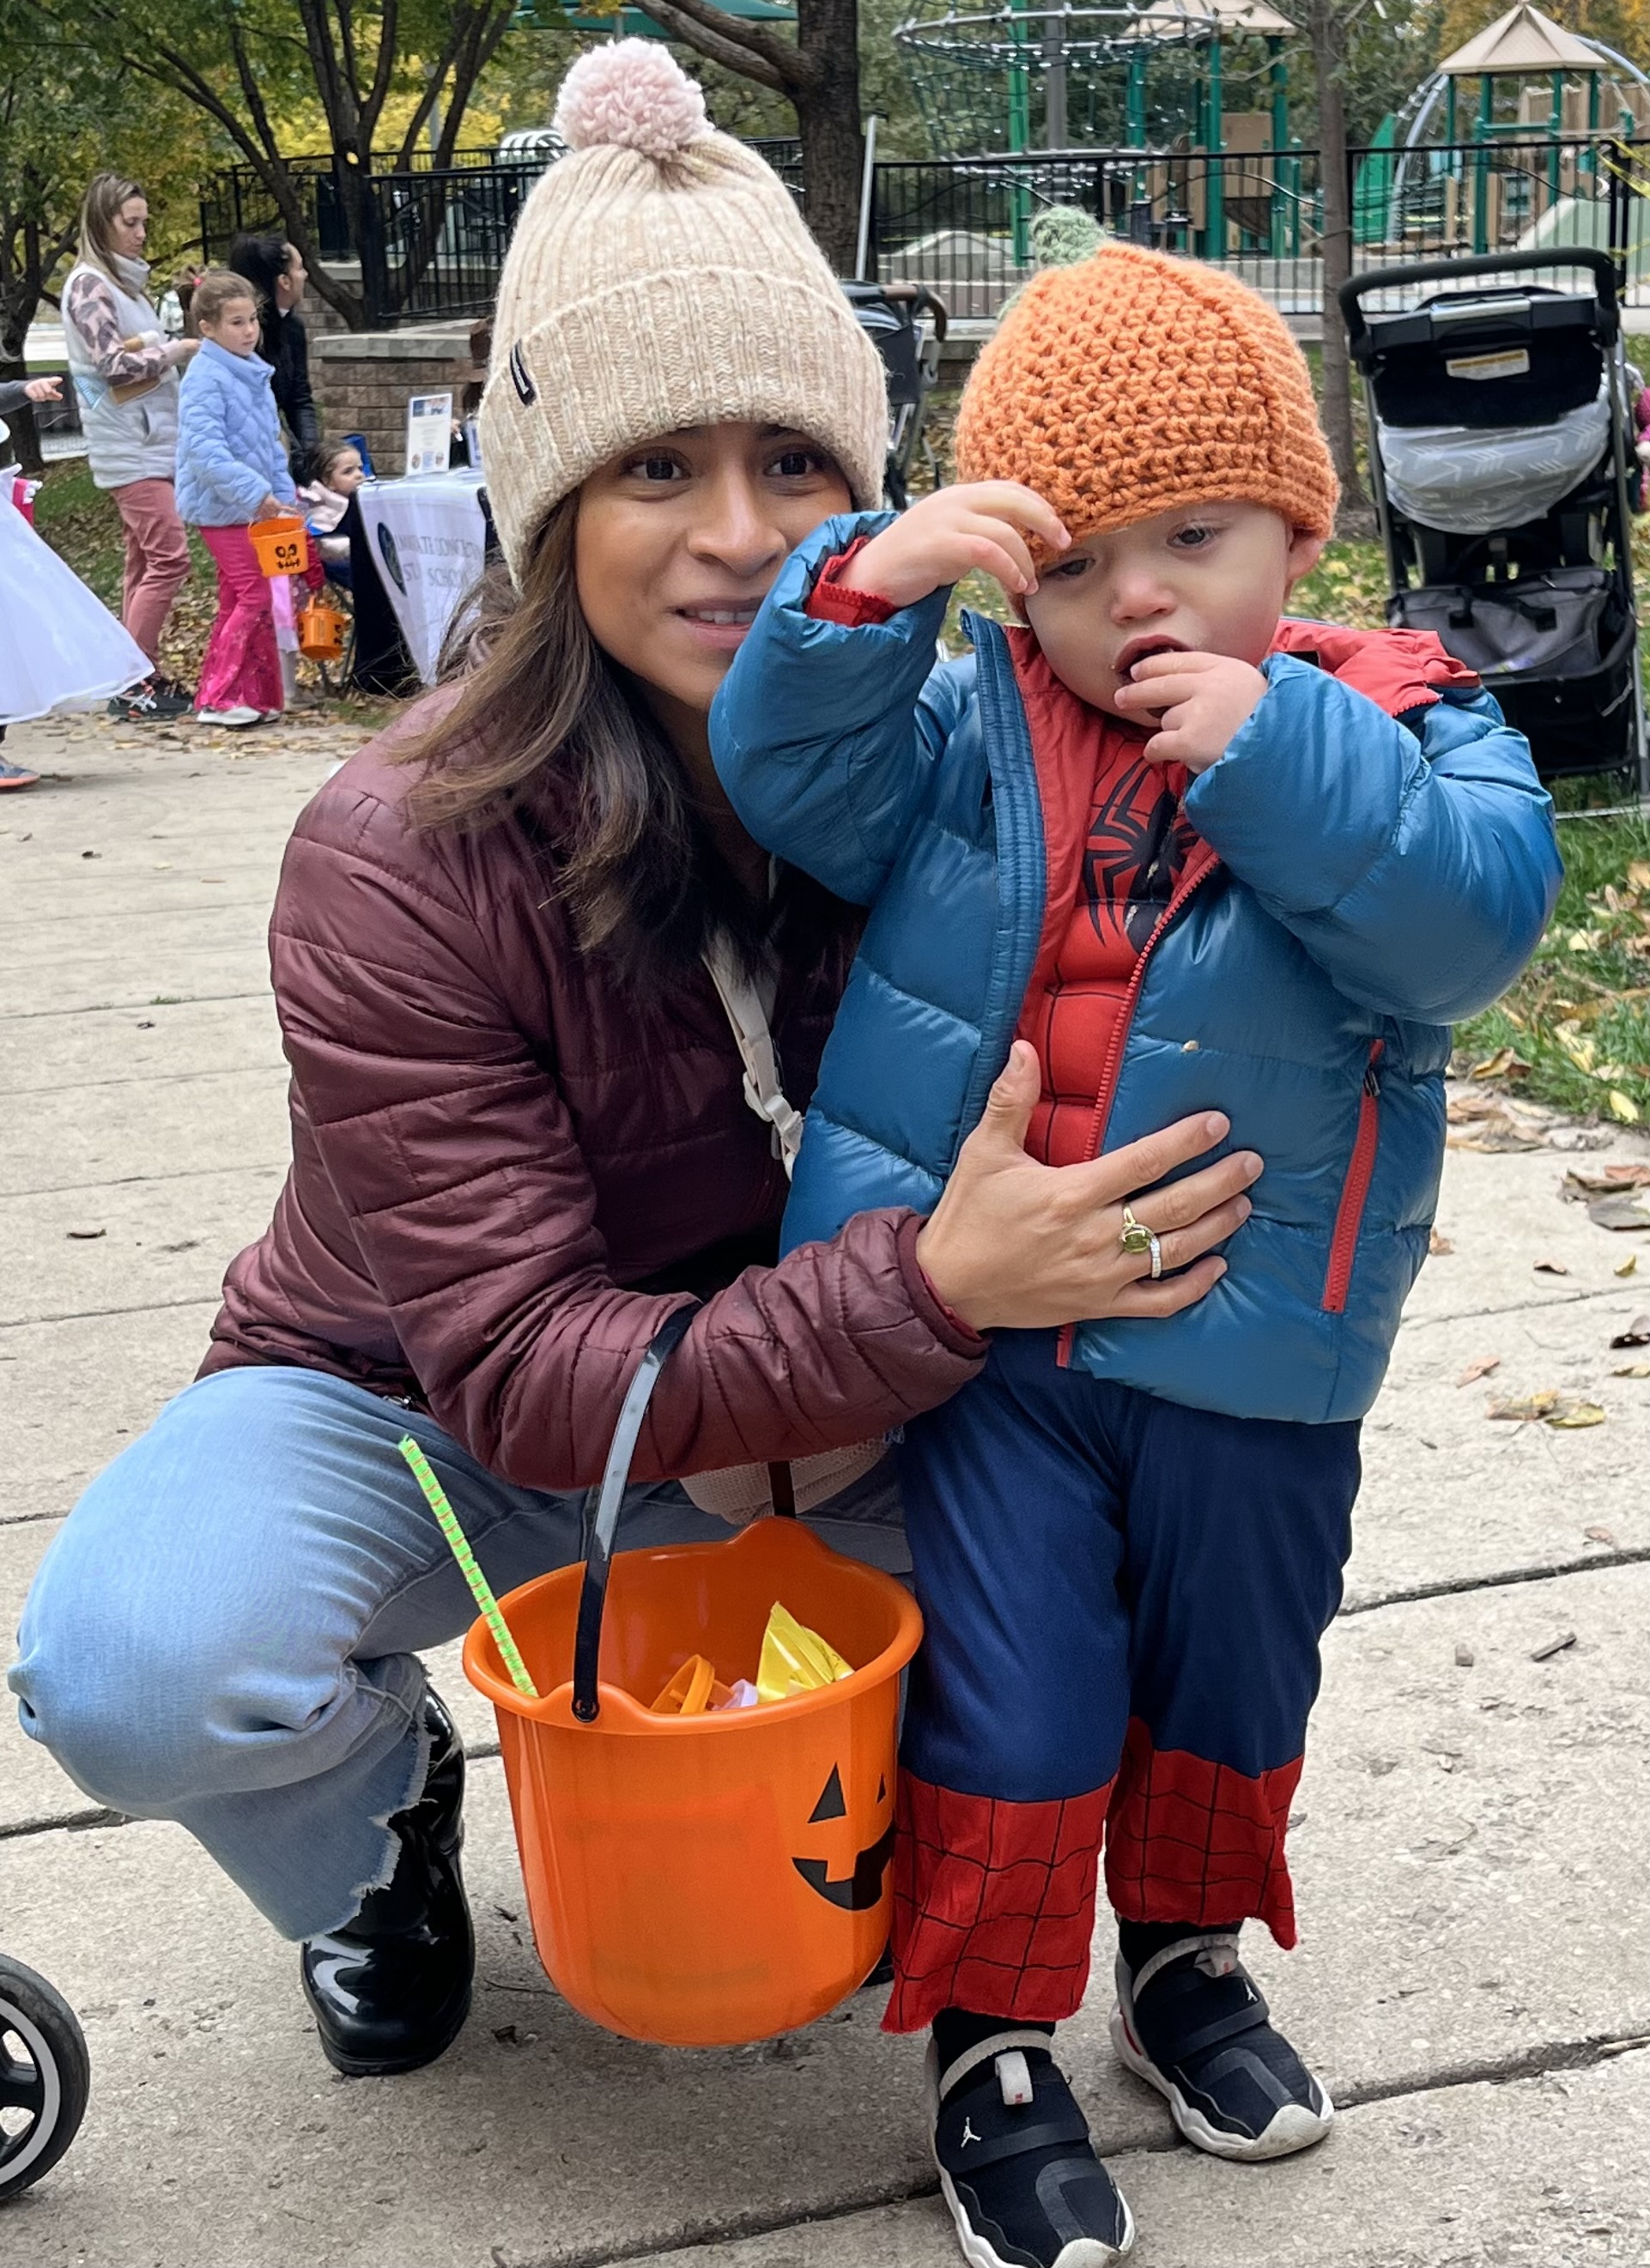 Mom and Spiderman in Orange hat